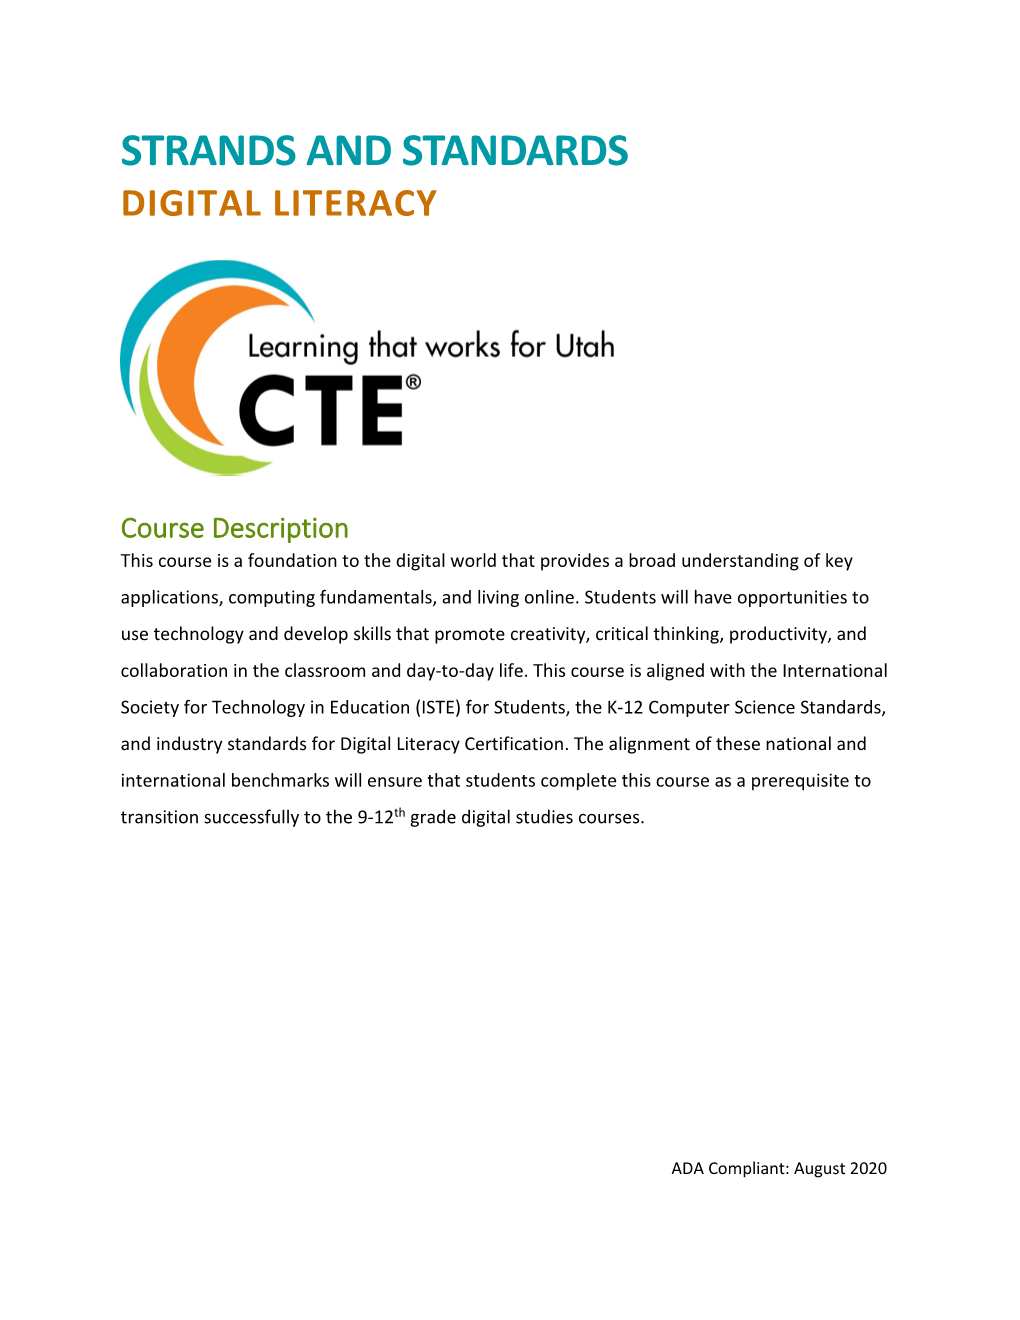 Digital Literacy Strands and Standards